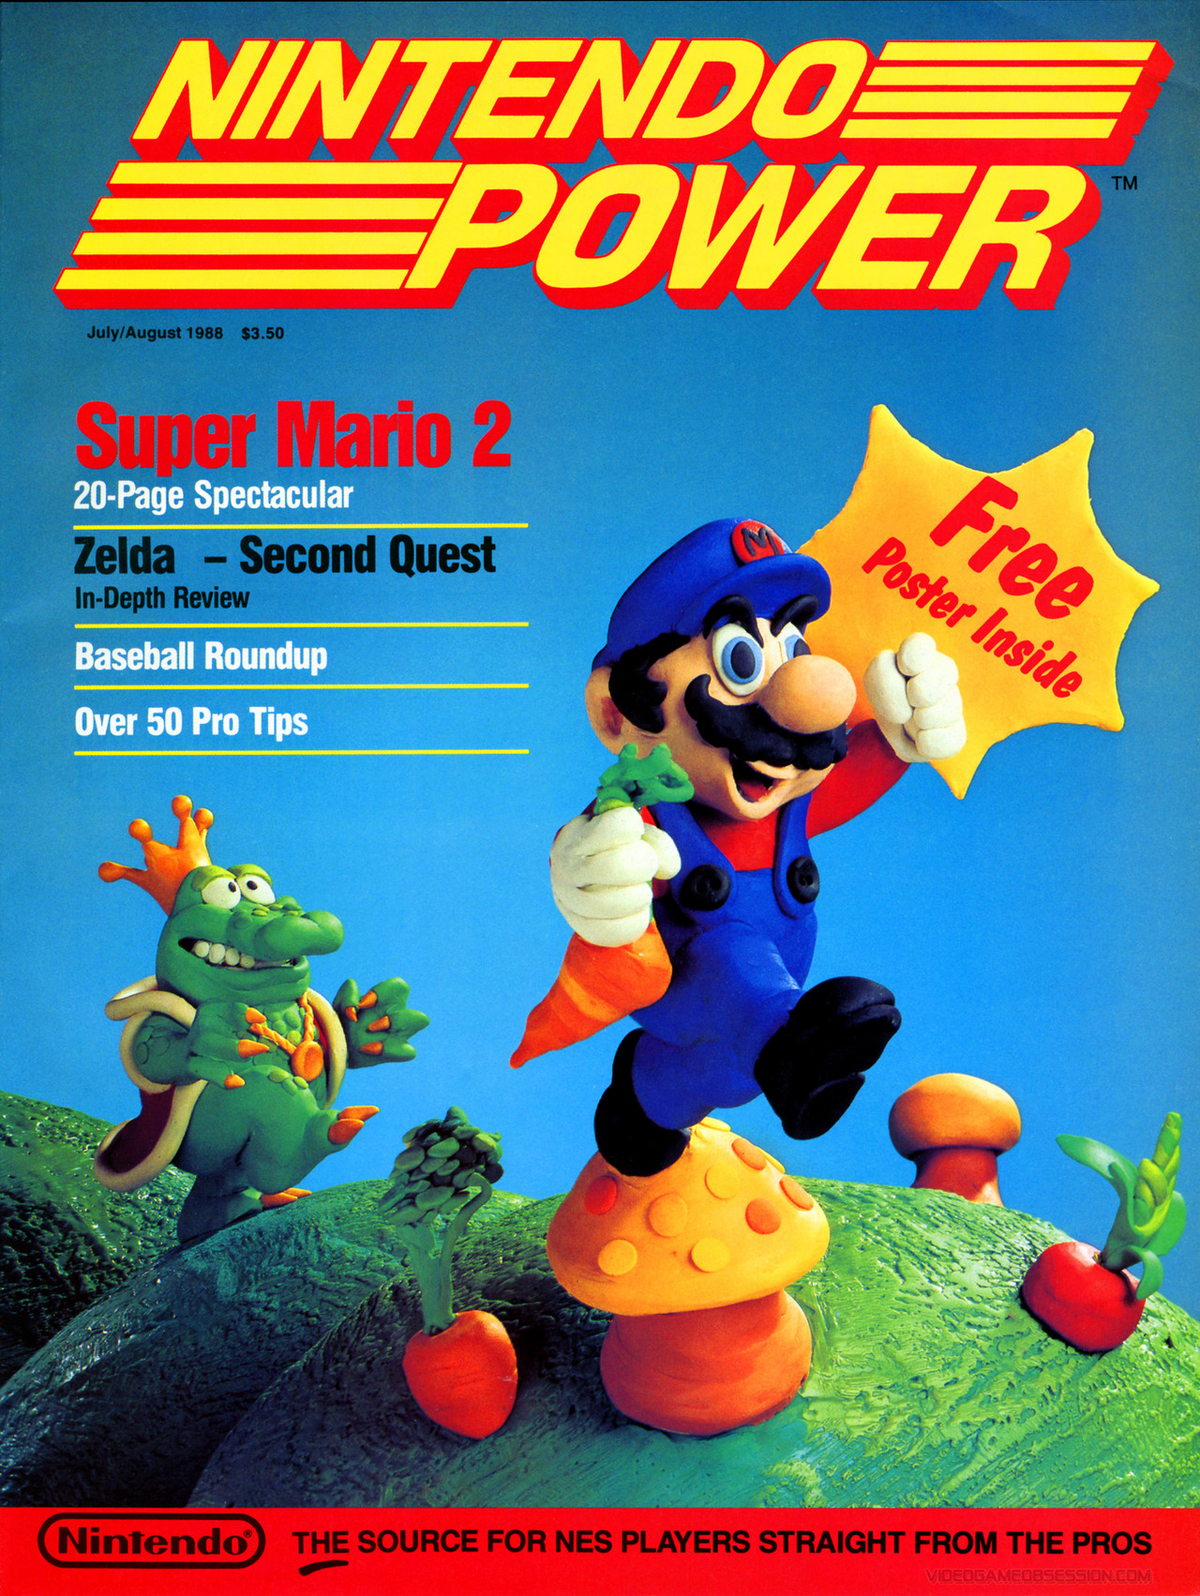 Nintendo power. Nintendo Power журнал. Журнал Марио. Супер Нинтендо 1988. Nintendo Power 1 выпуск.